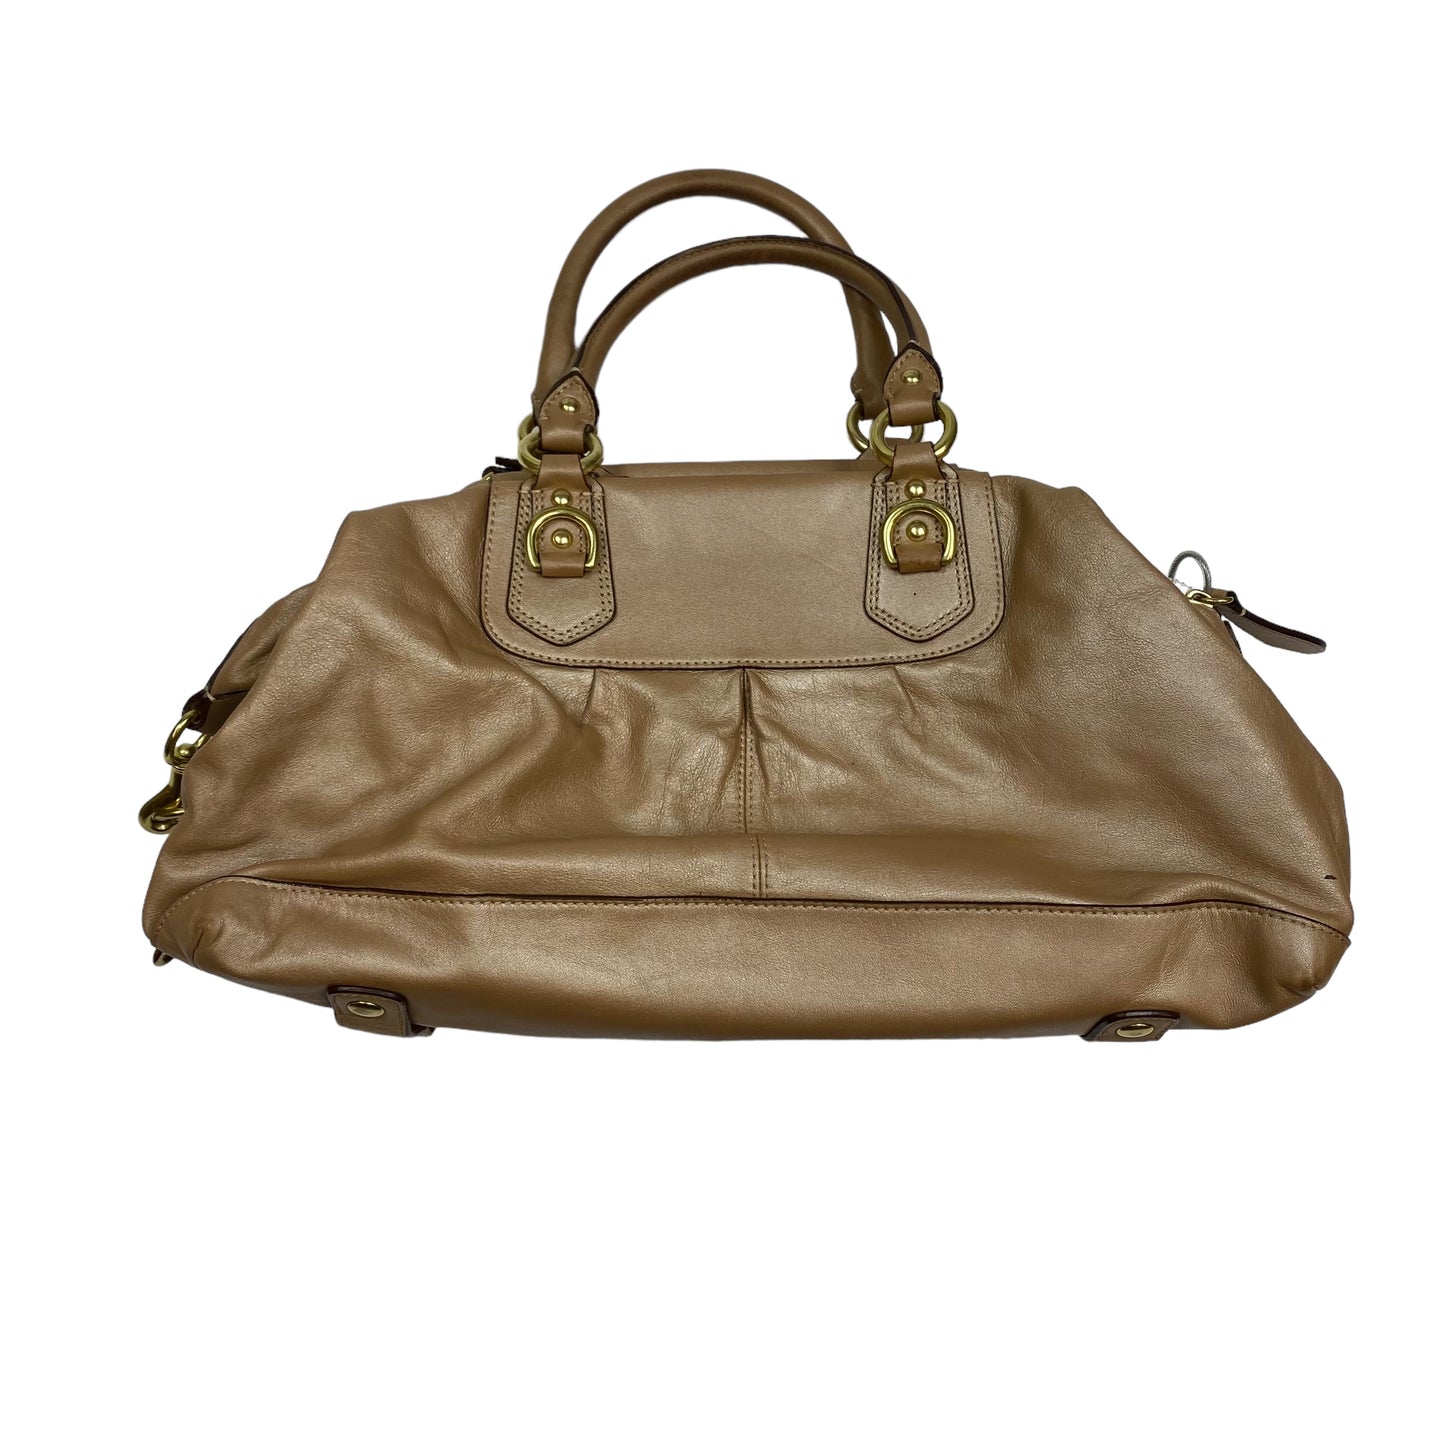 Handbag Designer Coach, Size Medium